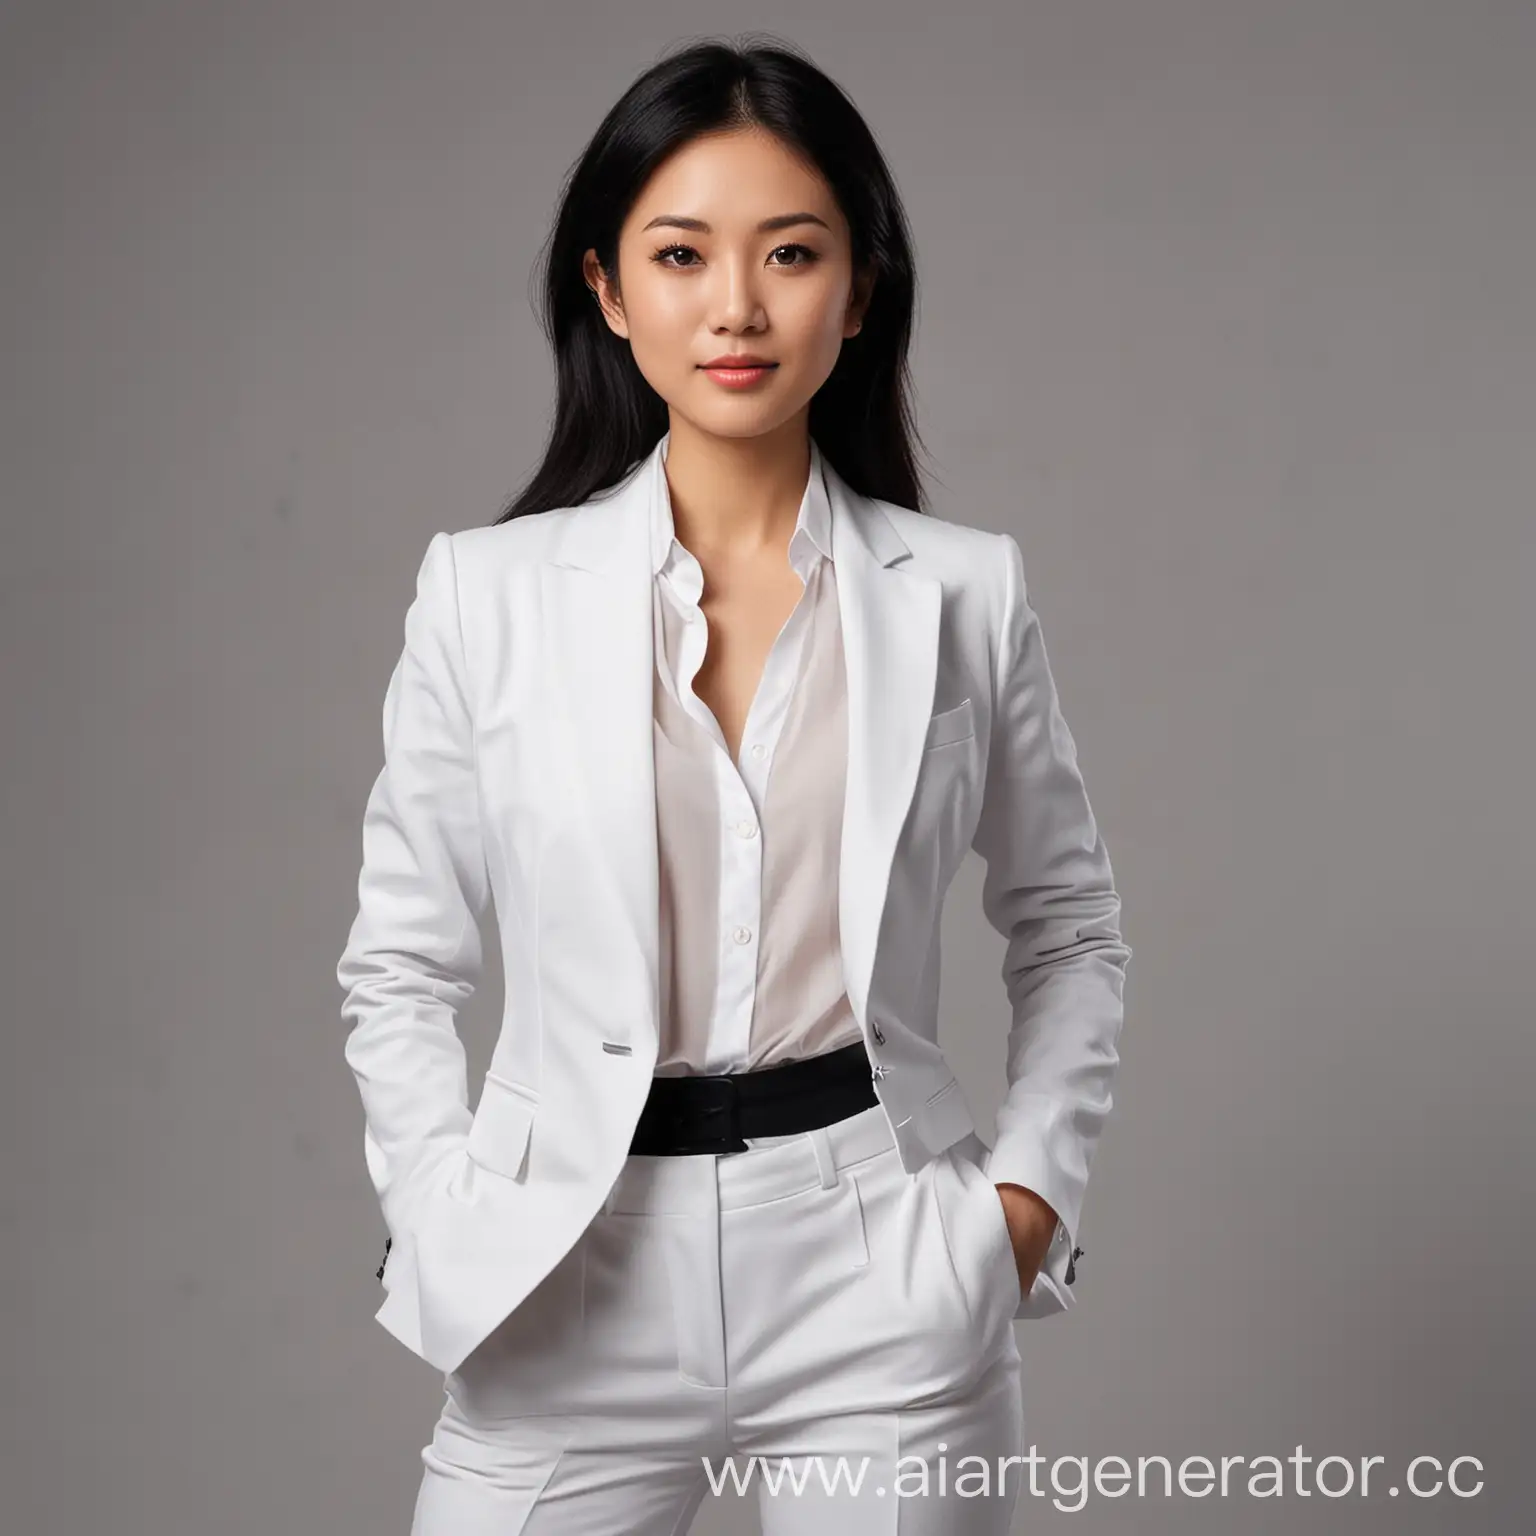 Young-Asian-Businesswoman-in-Elegant-White-Suit-Portrait